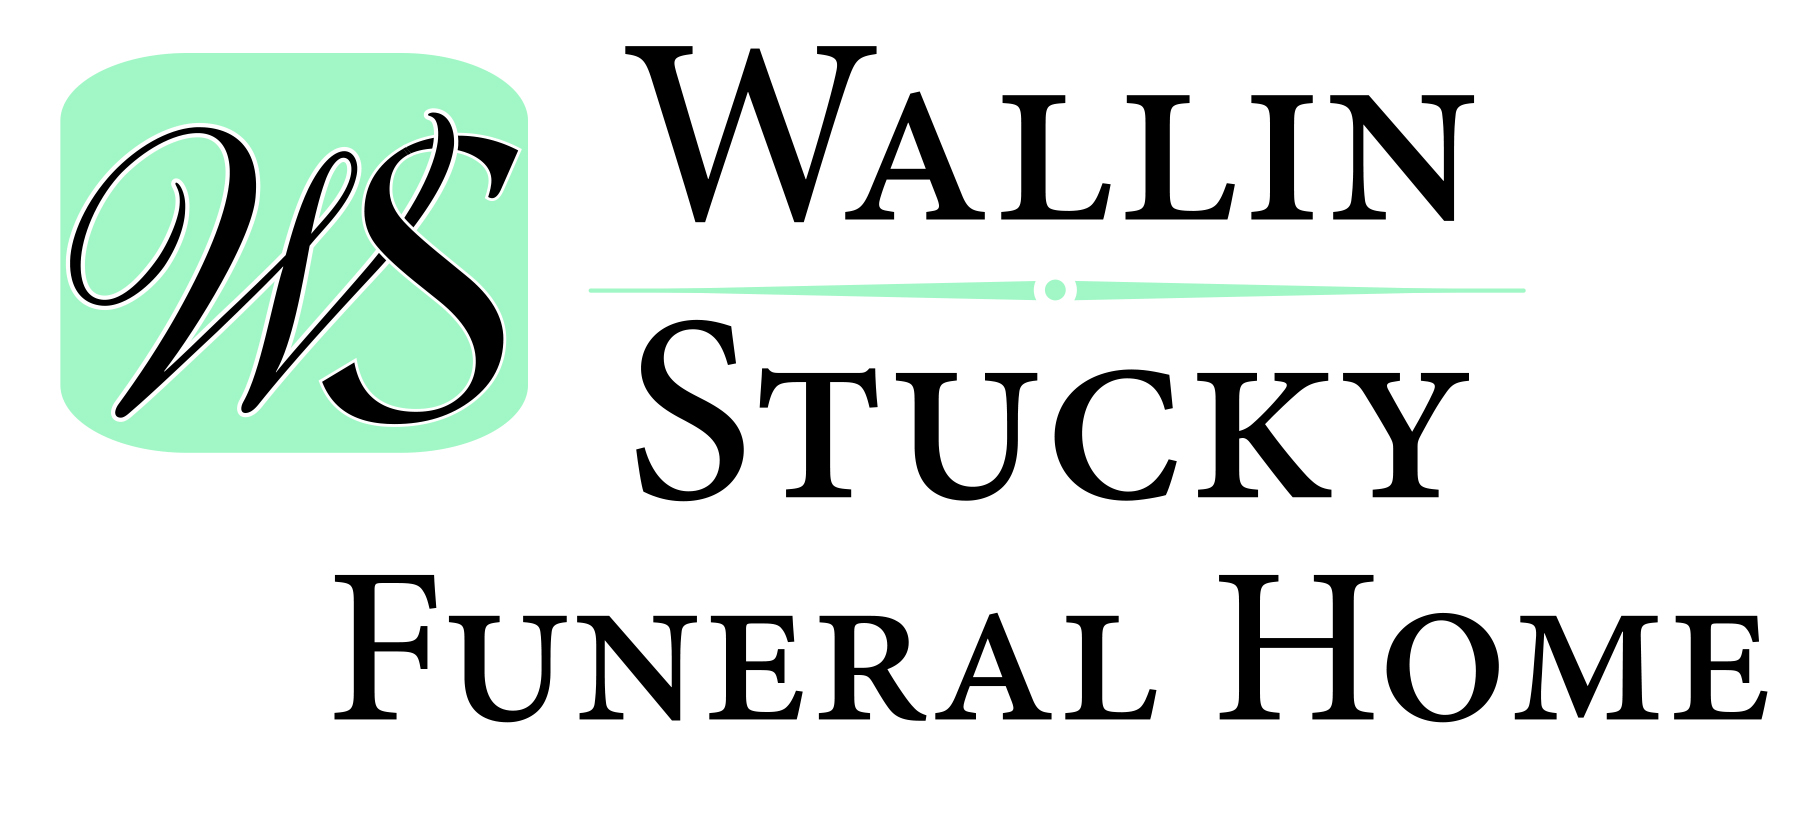 Wallin-Stucky Funeral Home